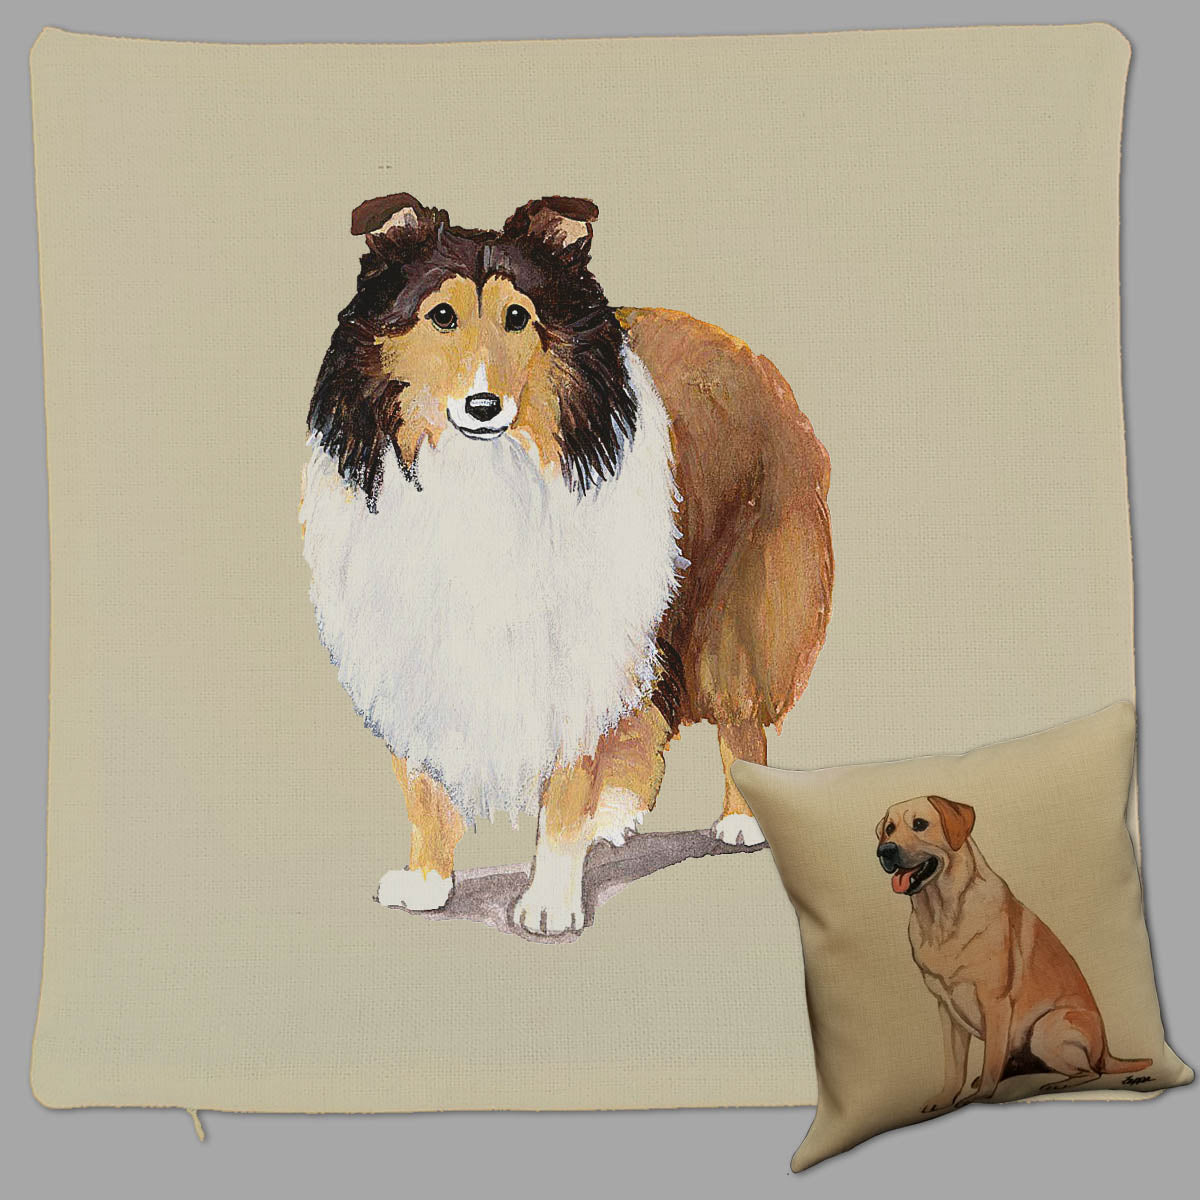 Shetland Sheepdog Throw Pillow